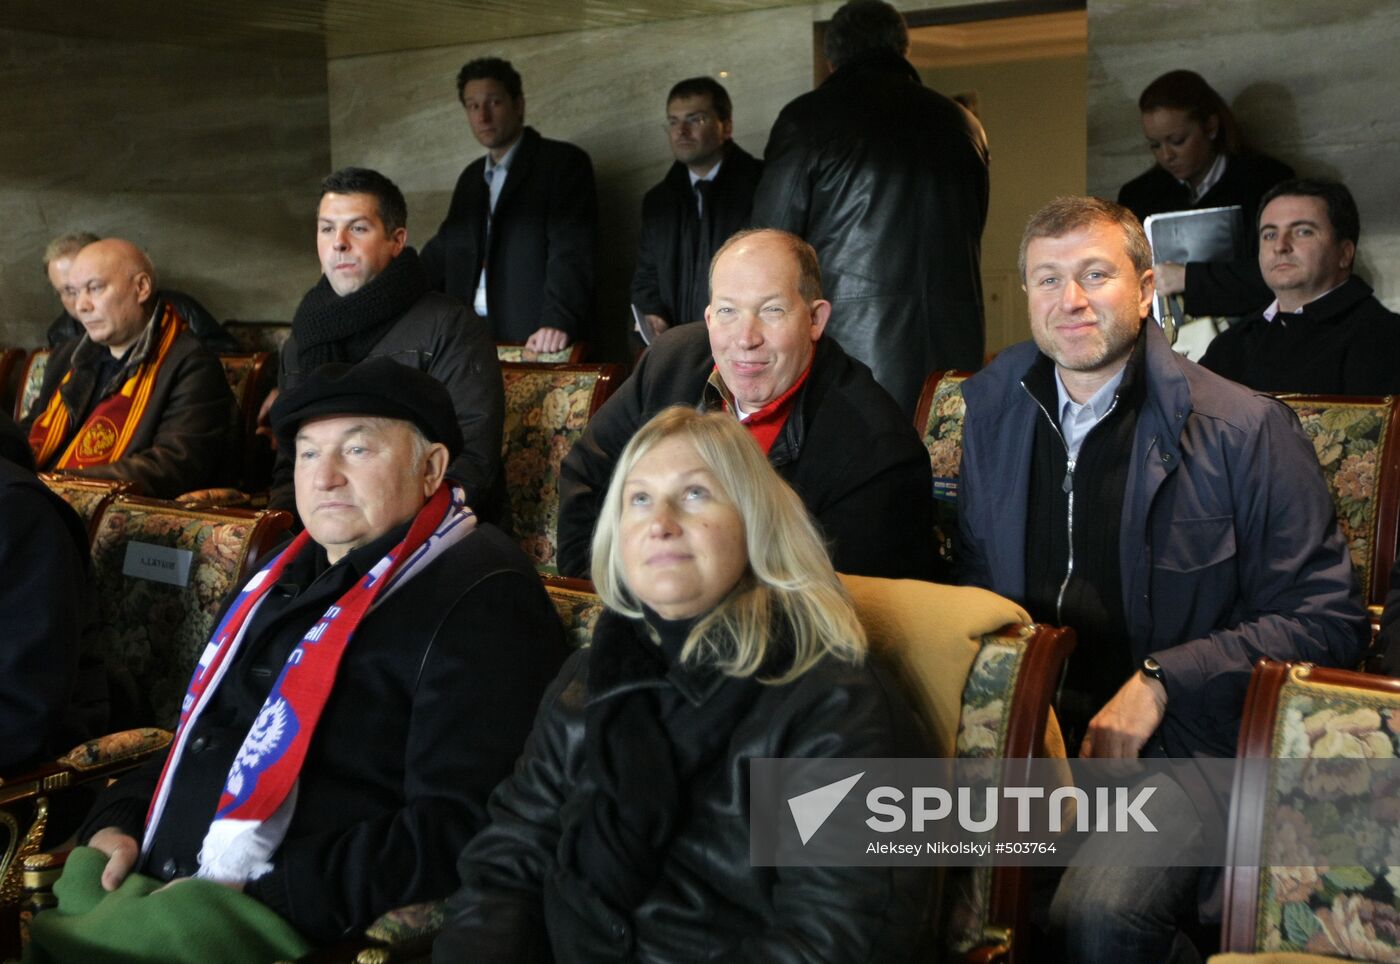 Yury Luzhkov attends Russia vs. Slovenia football match